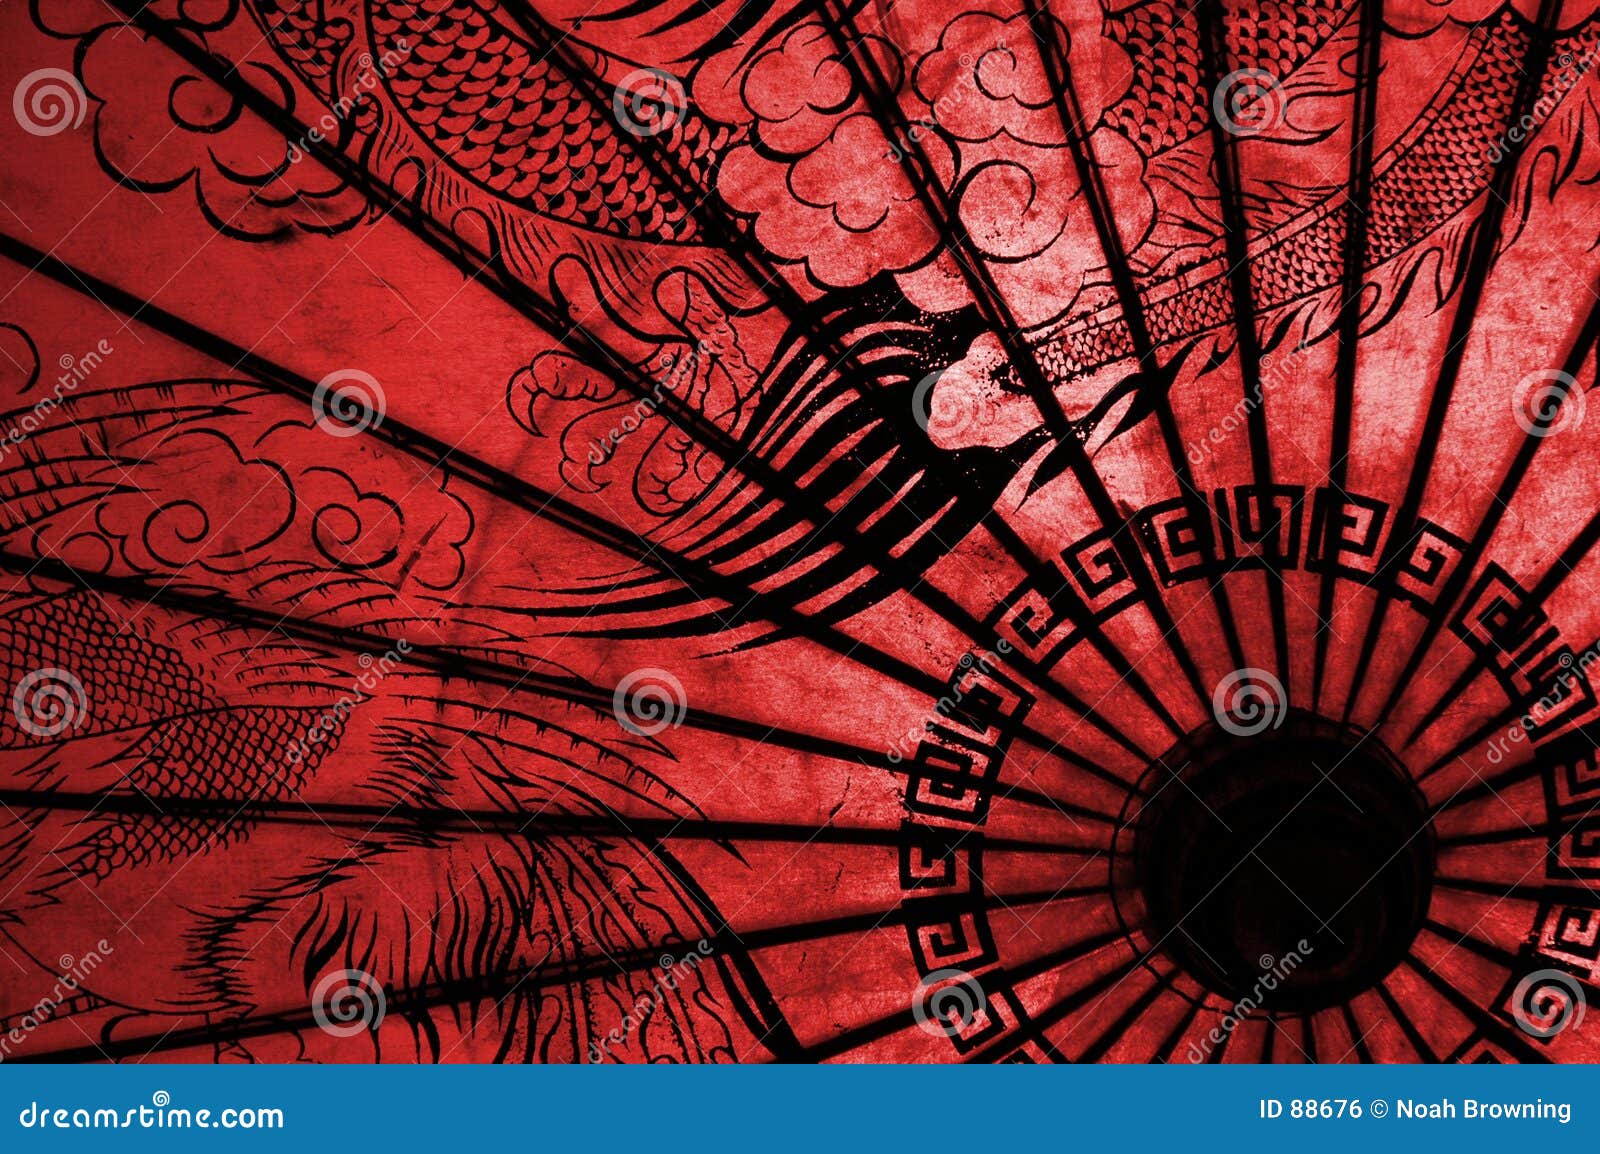 Oriental Umbrella Royalty Free Stock Image - Image: 88676